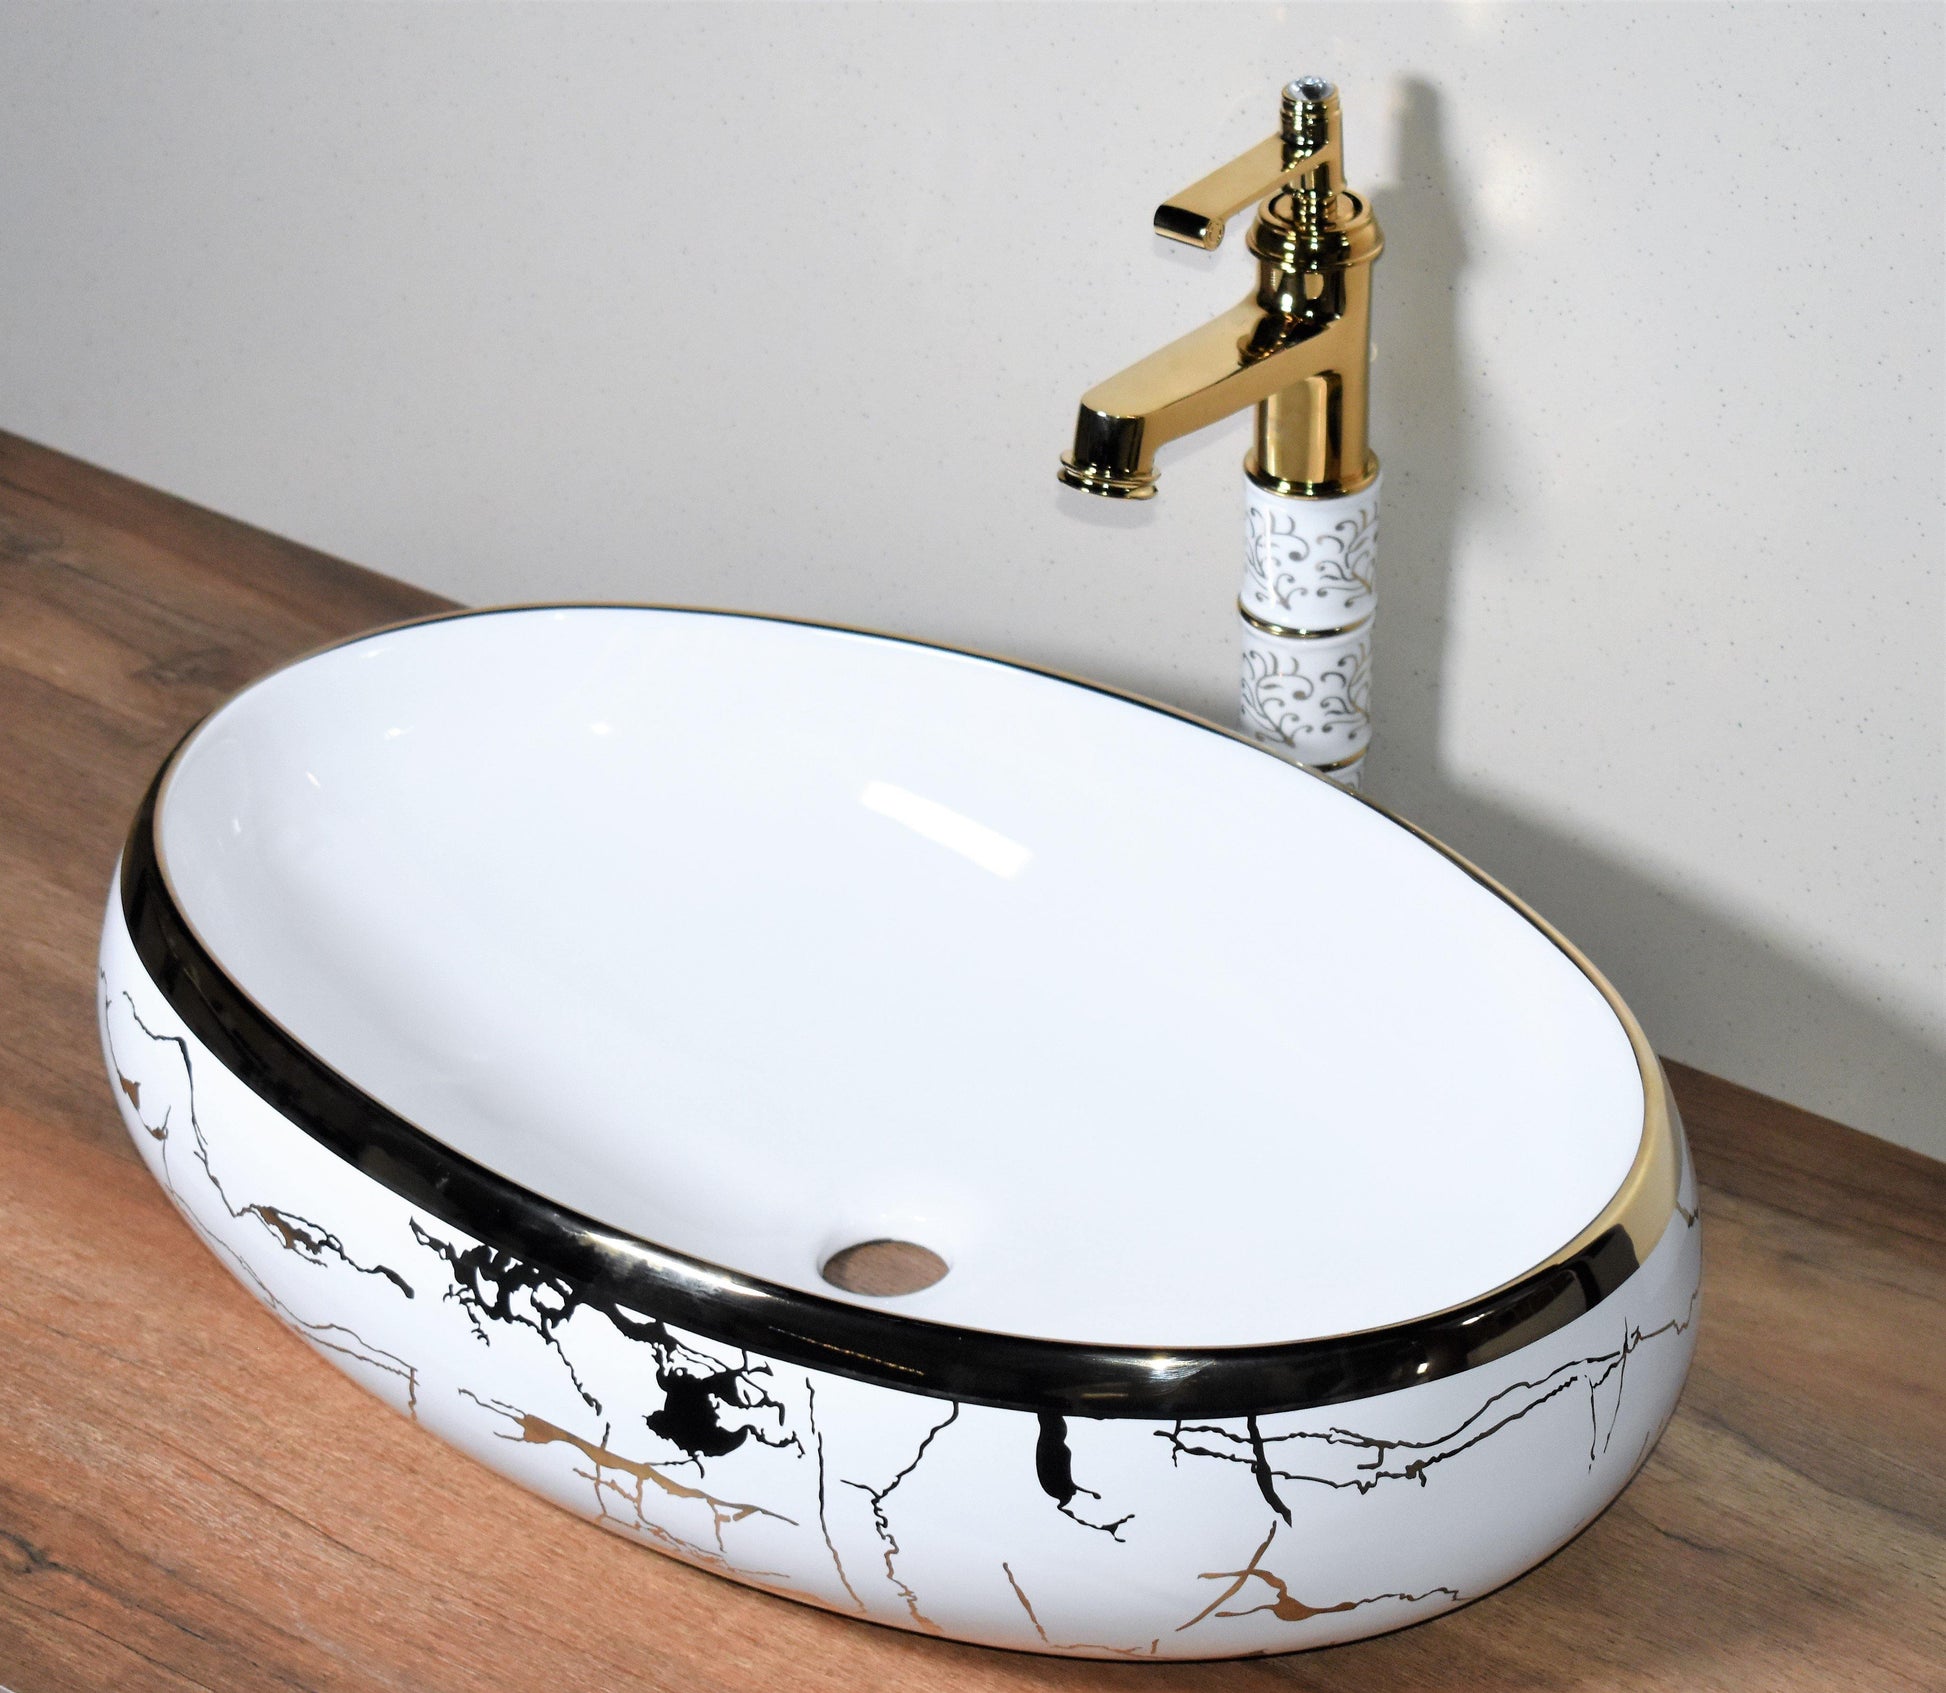 Ceramic Premium Designer Oval Shape Table Top Over Counter Vessel Sink Wash Basin for Bathroom 24 X 16 X 6 Inch Gold White Basin For Bathroom - Bath Outlet